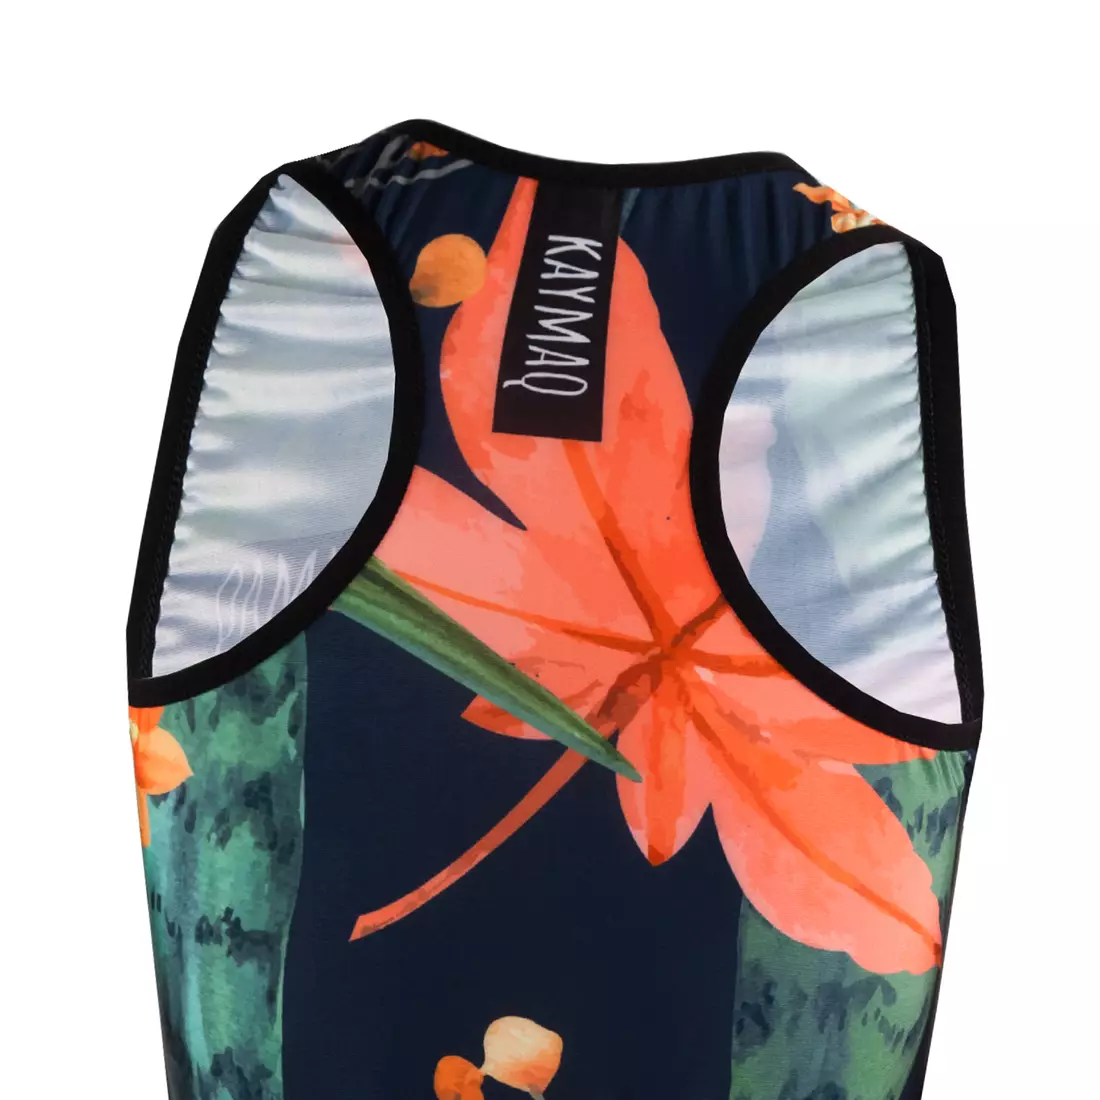 KAYMAQ DESIGN W13 women's sleeveless cycling t-shirt